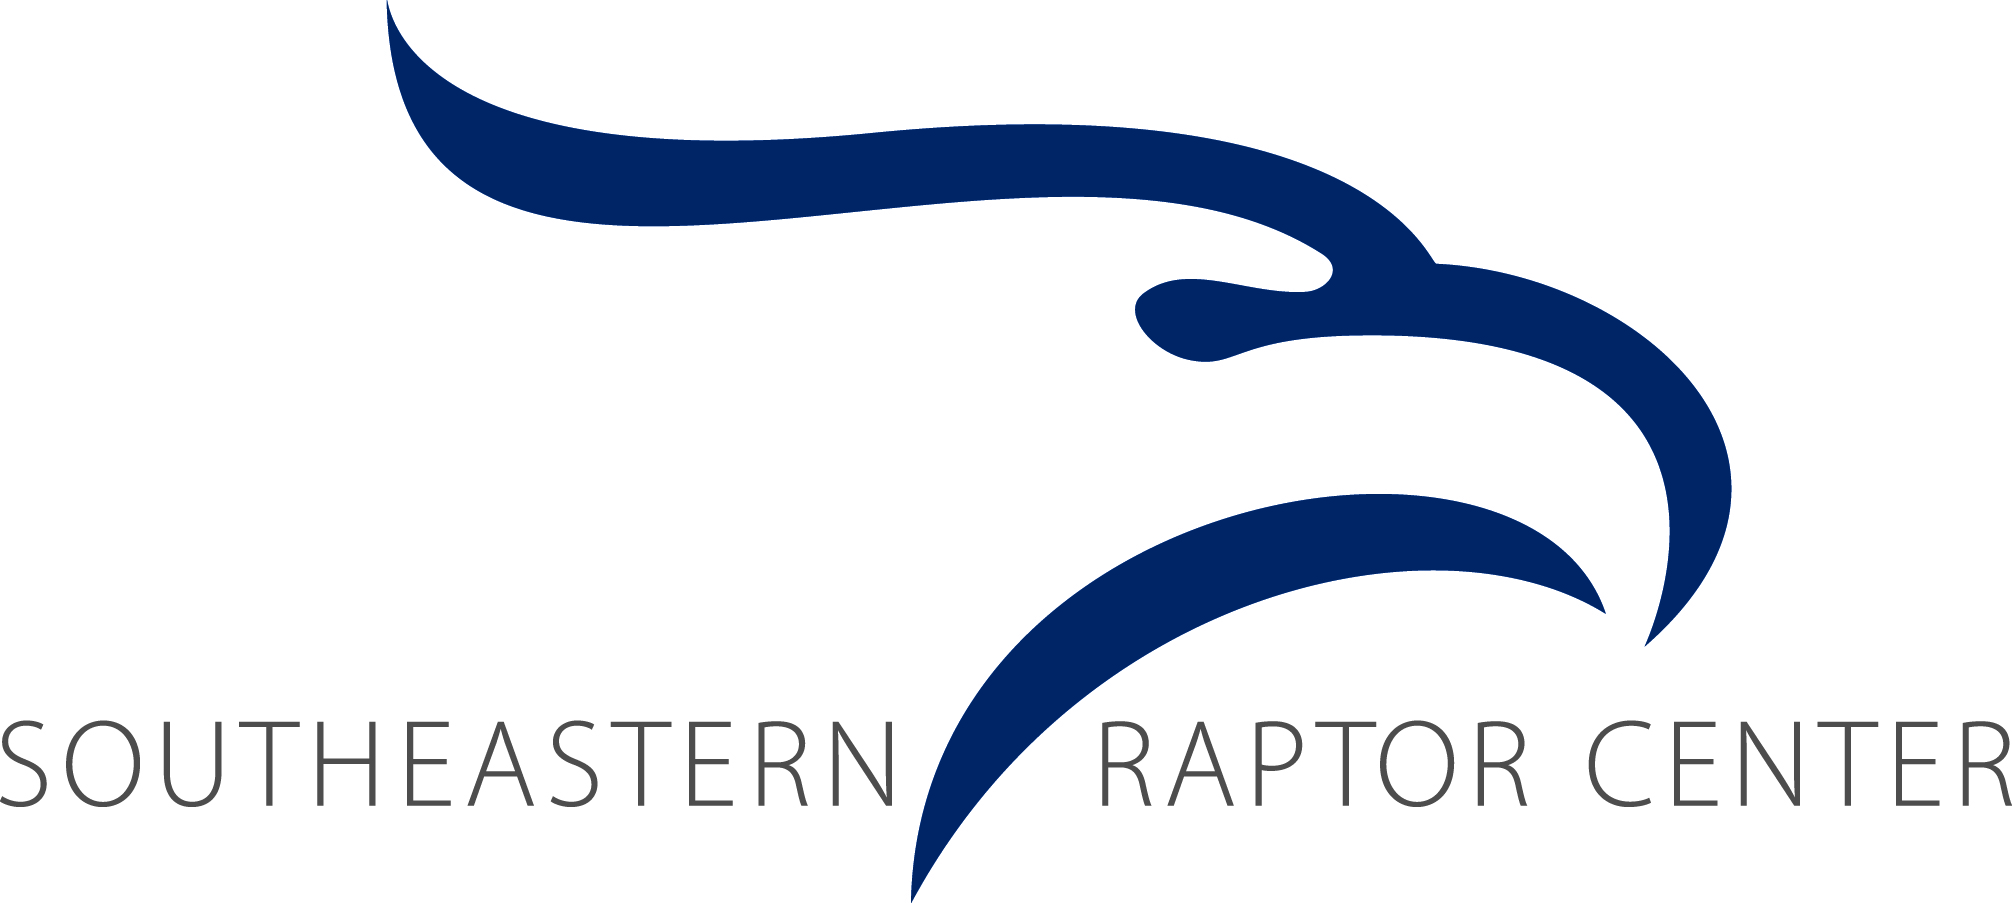 Southeastern Raptor Center visual